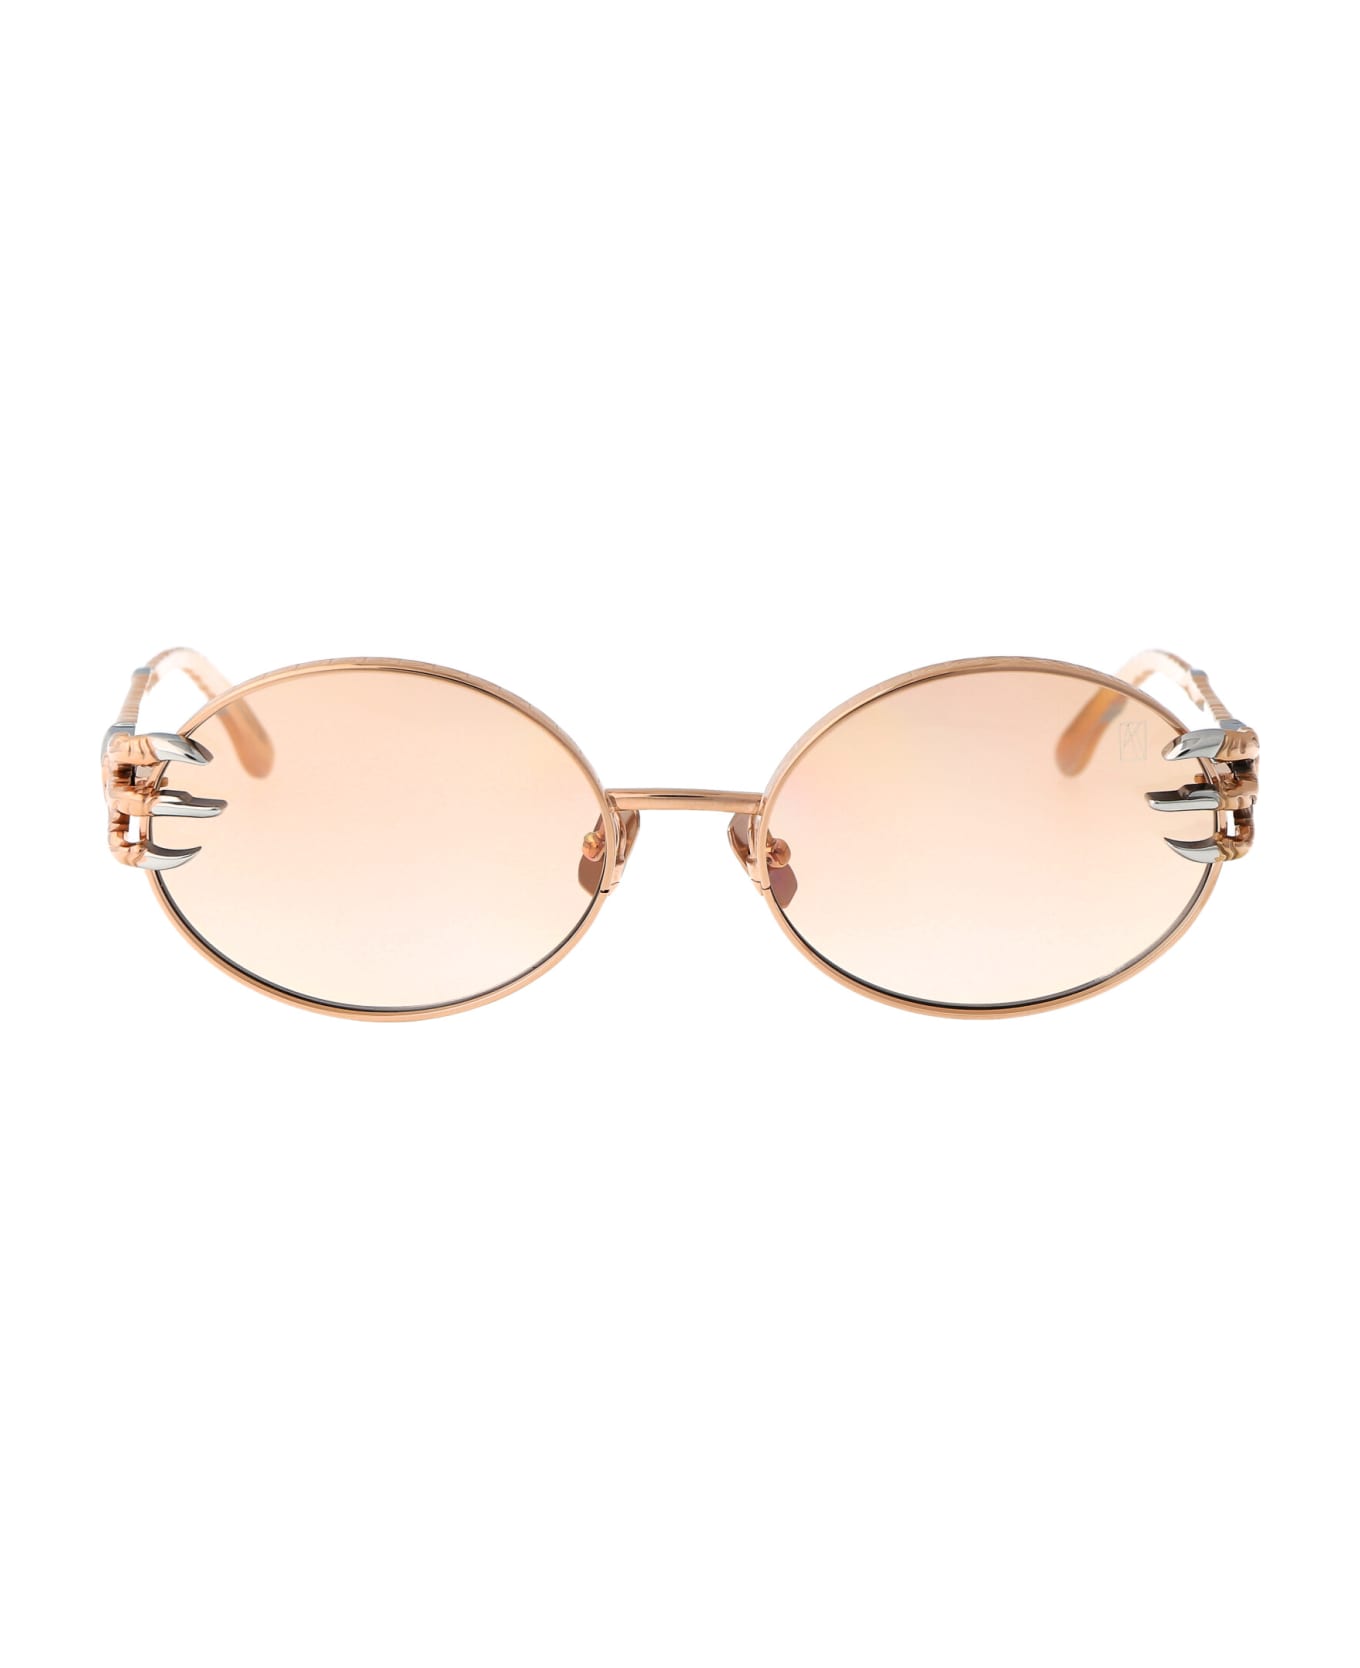 Anna-Karin Karlsson Claw Aventure Sunglasses Versace - ROSE GOLD